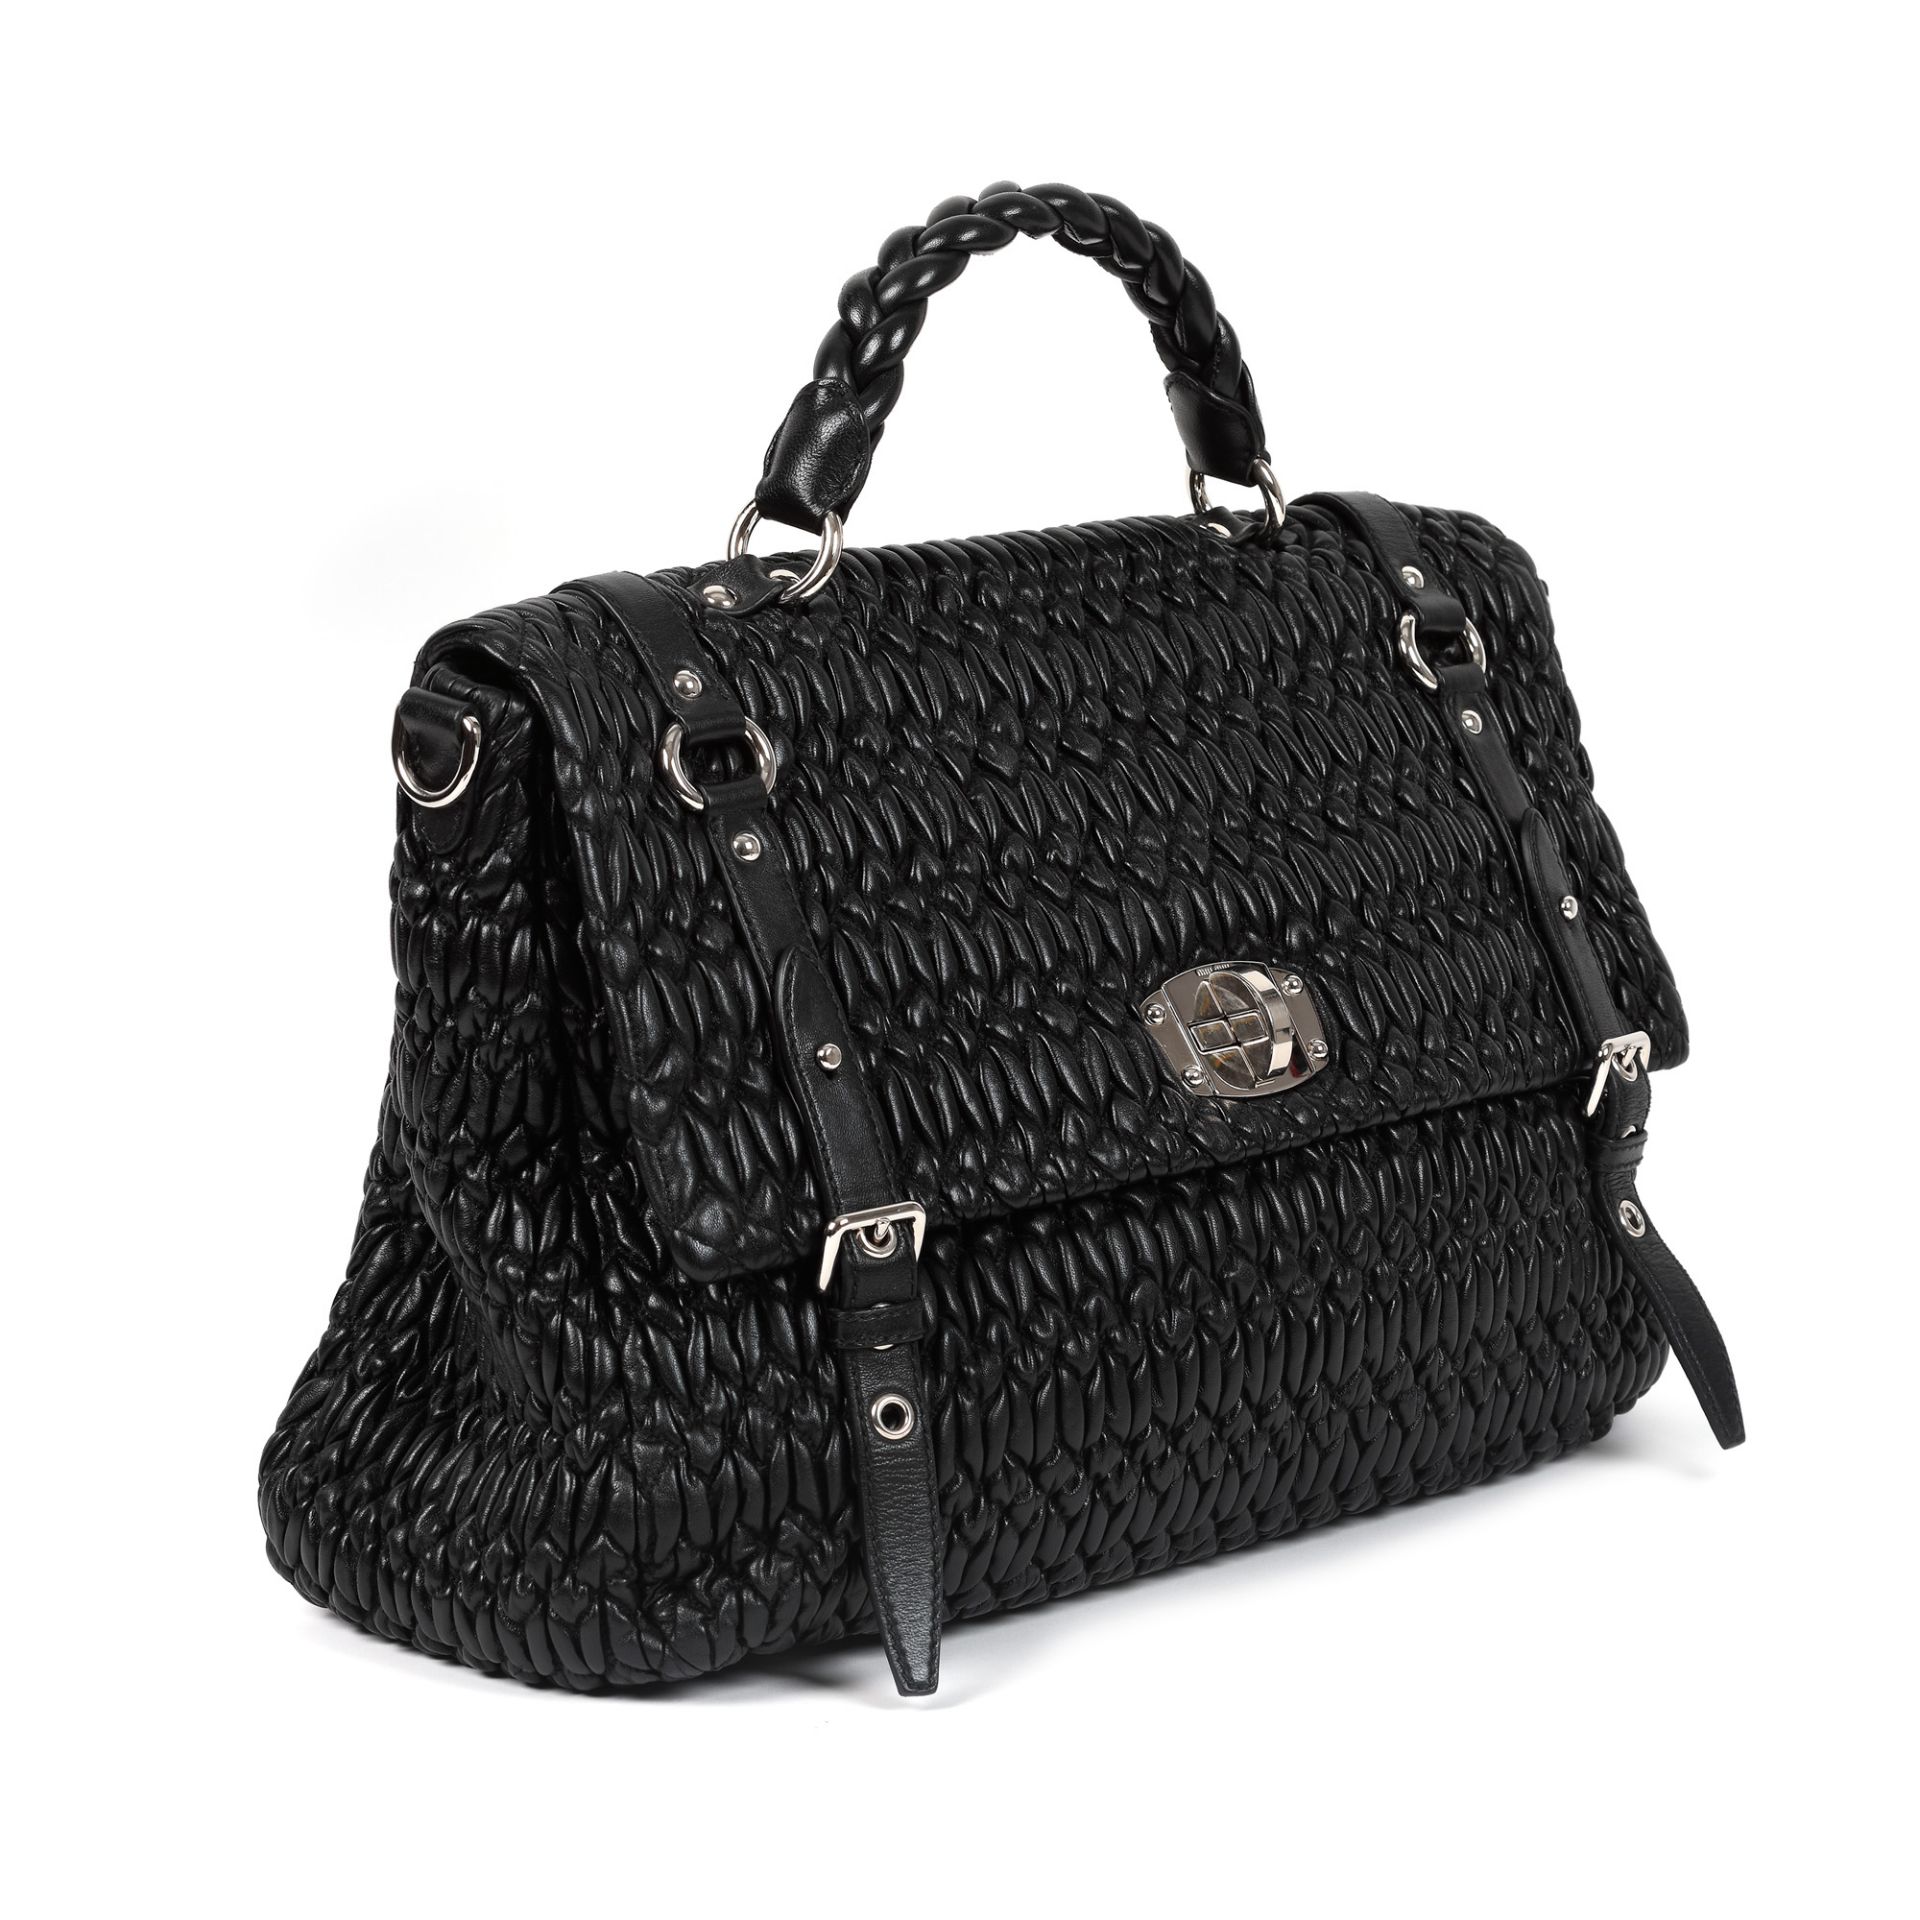 "Black Cloquet" - Miu Miu bag, Nappa leather, black - Image 2 of 4